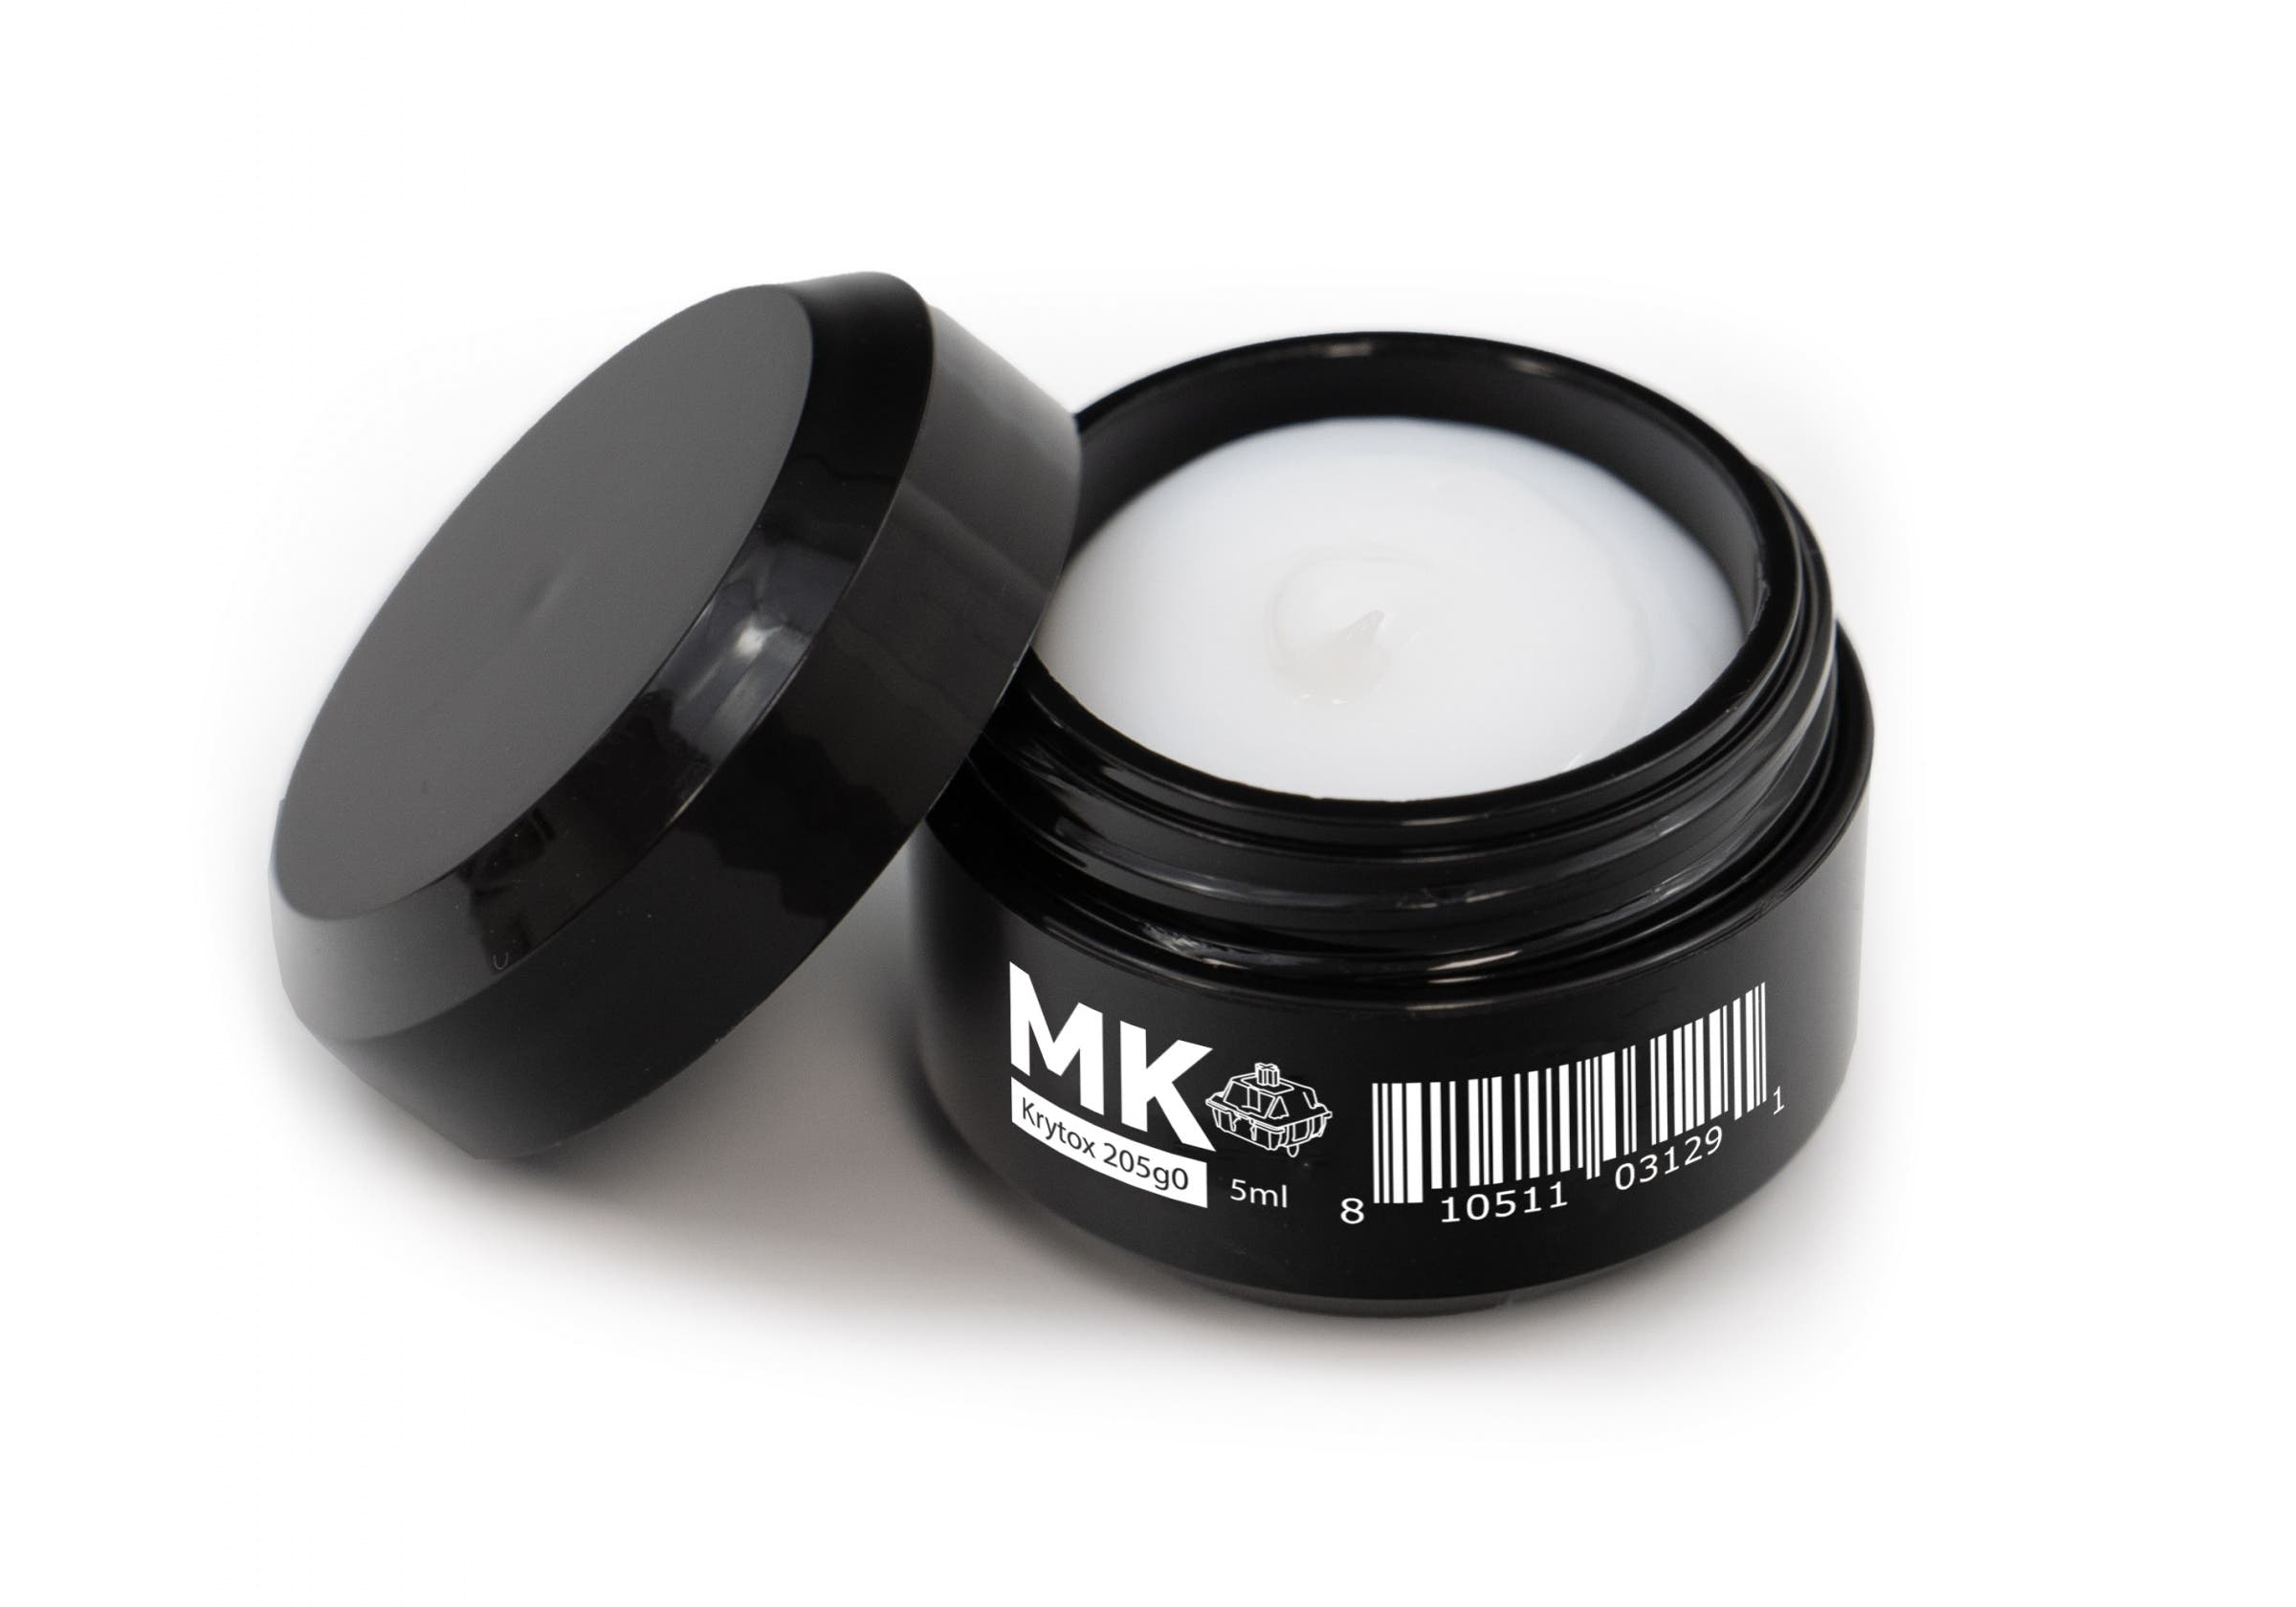 MK Krytox 205g0 Lube 5ml